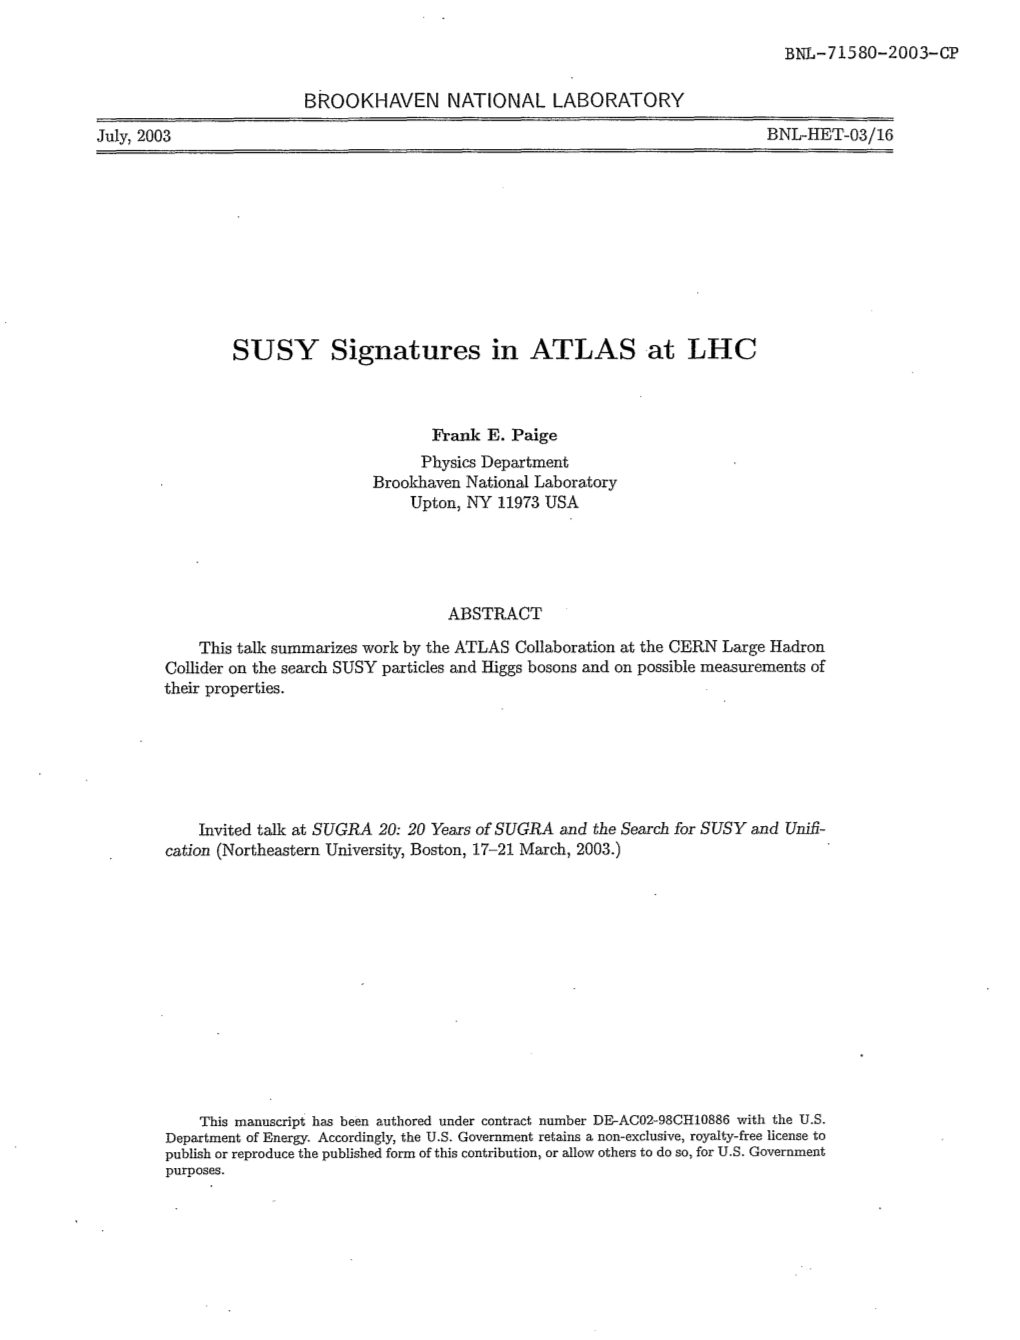 SUSY Signatures in ATLAS at LHC